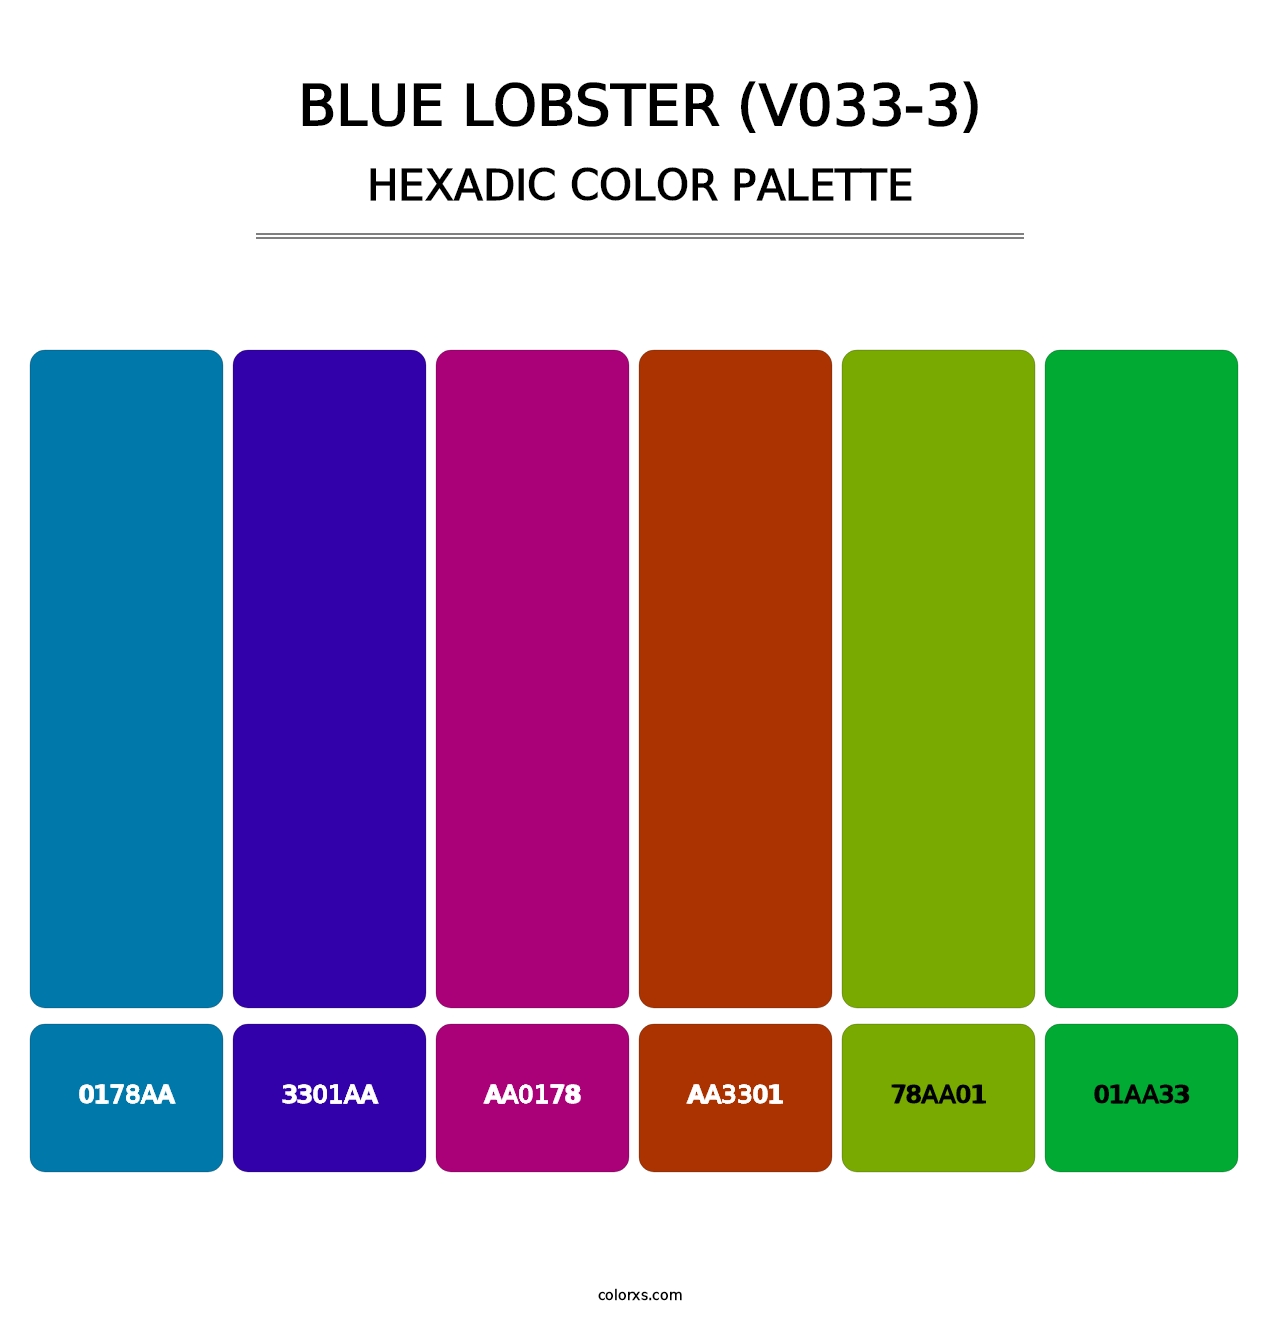 Blue Lobster (V033-3) - Hexadic Color Palette